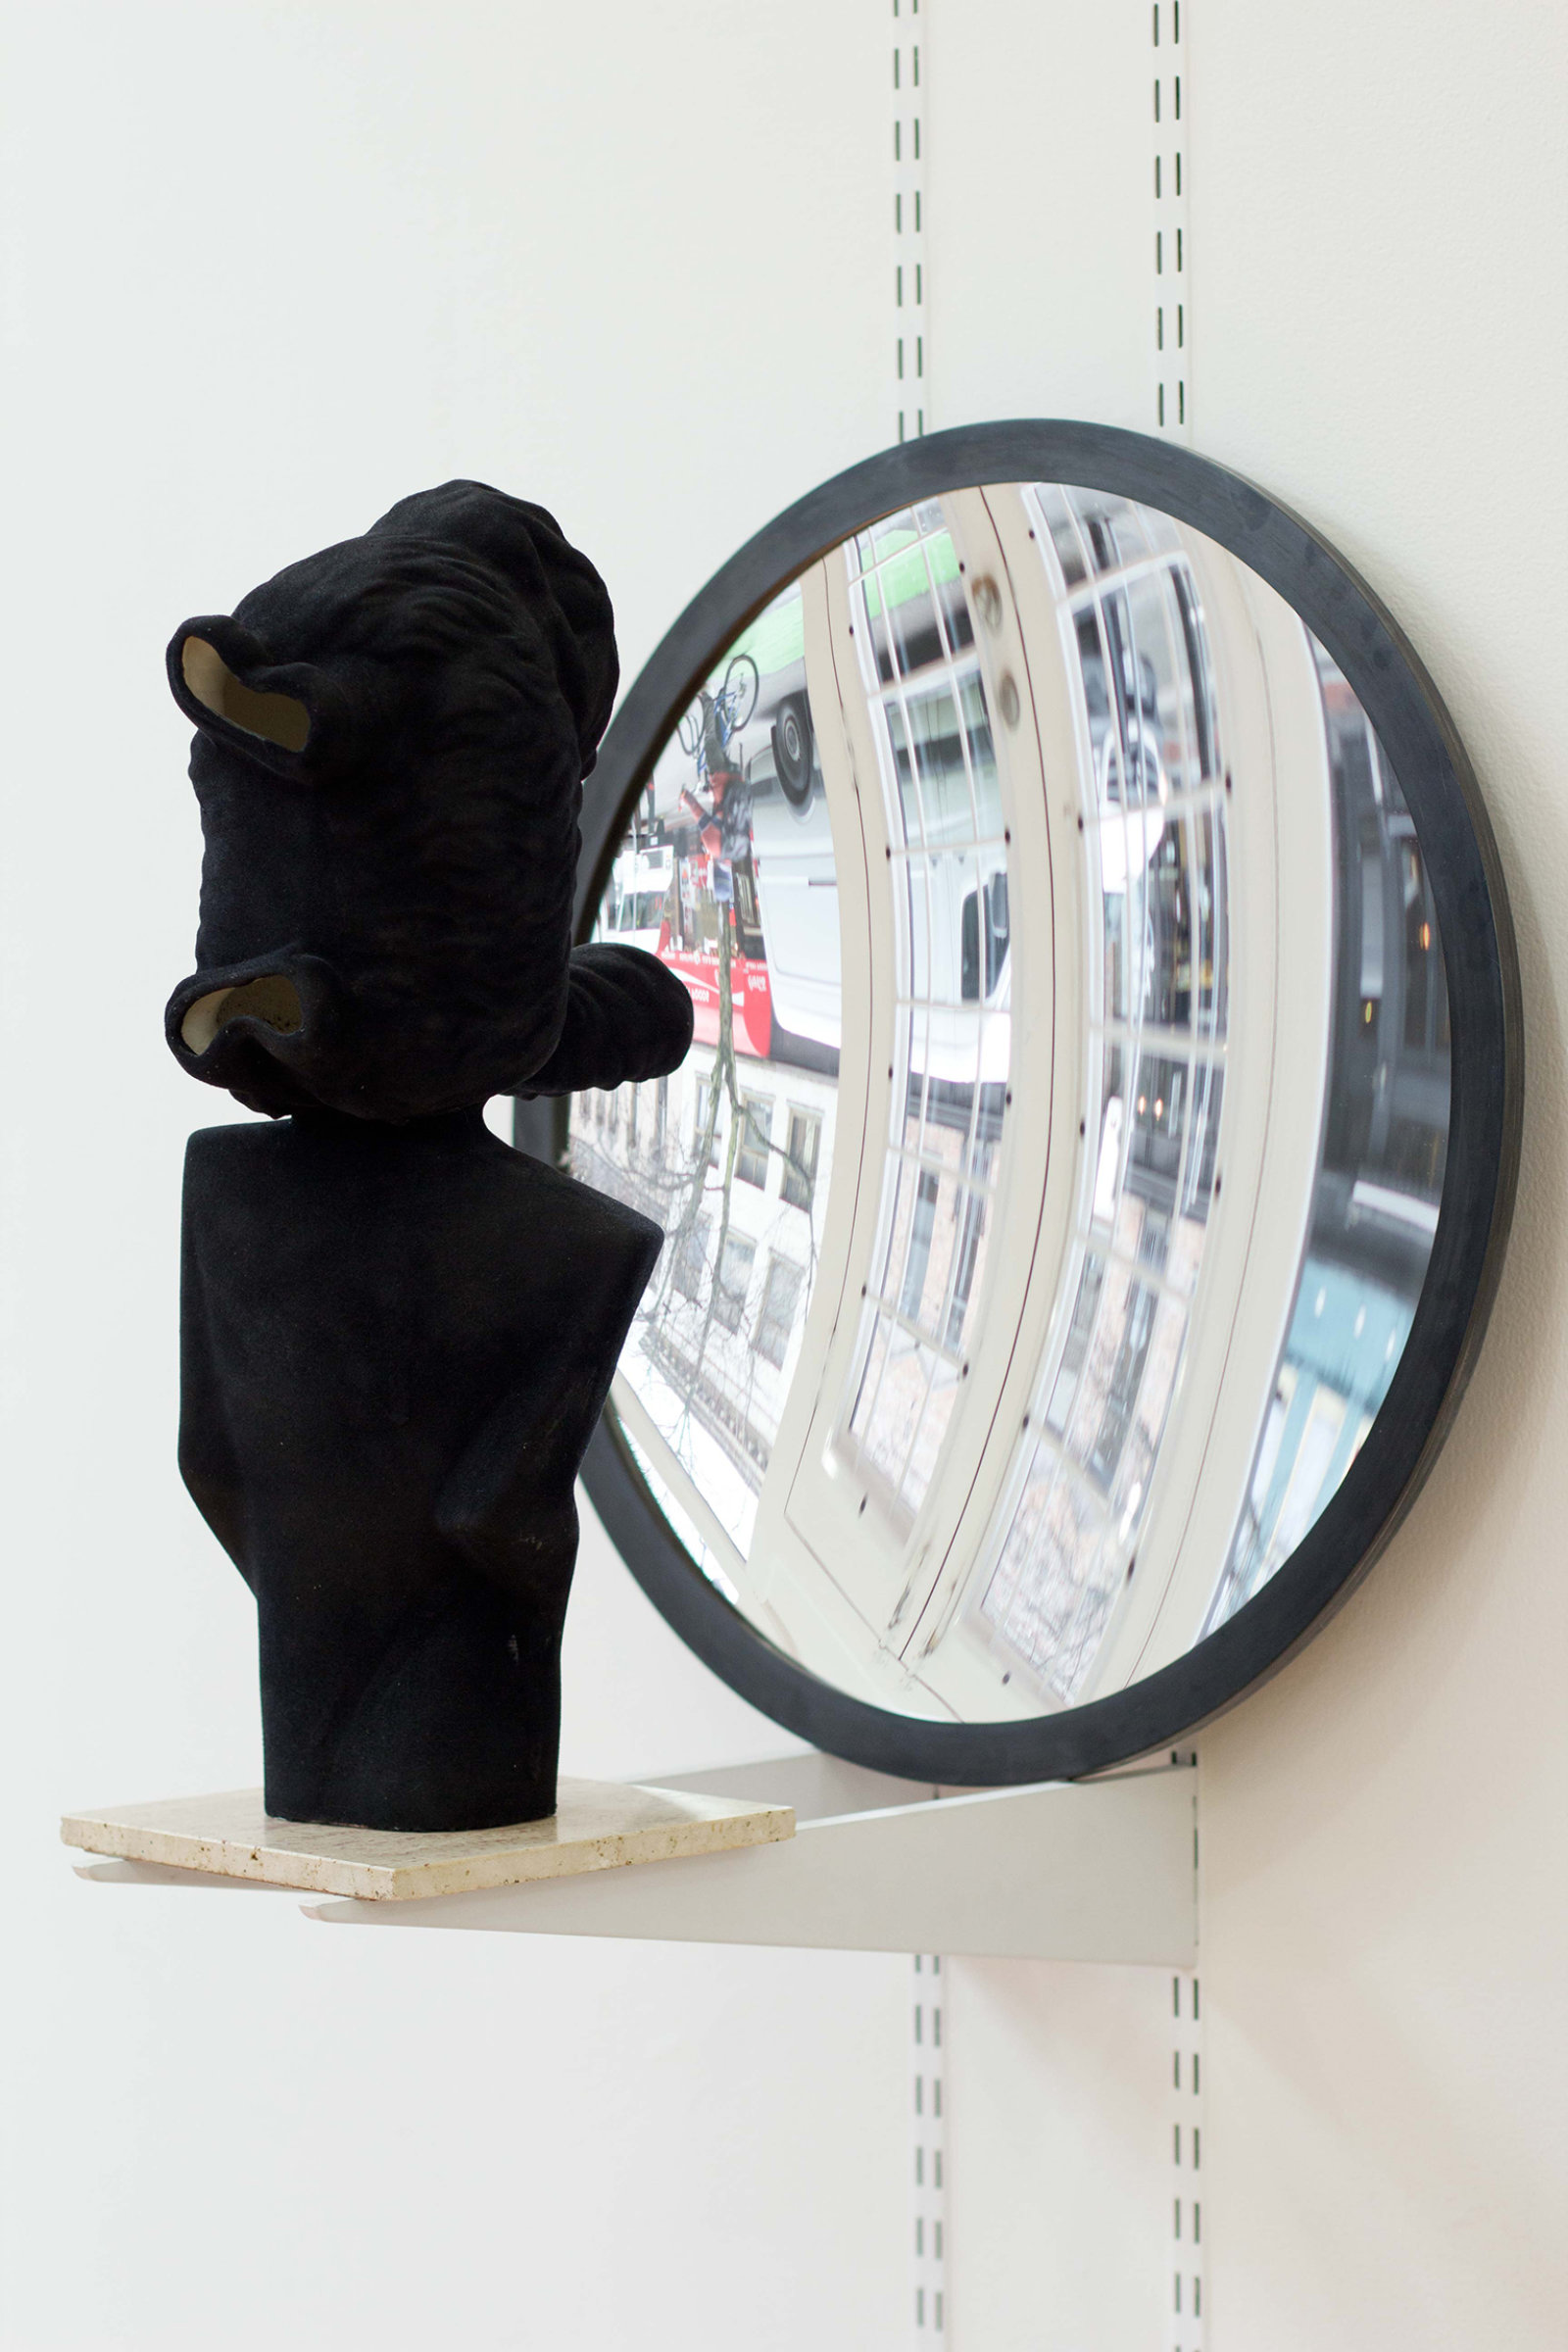 Valérie Blass, La Meprise, 2015, porcelain, flocking, mirror, hanging system, marble slab, 21 x 8 x 10 in. (52 x 19 x 24 cm)